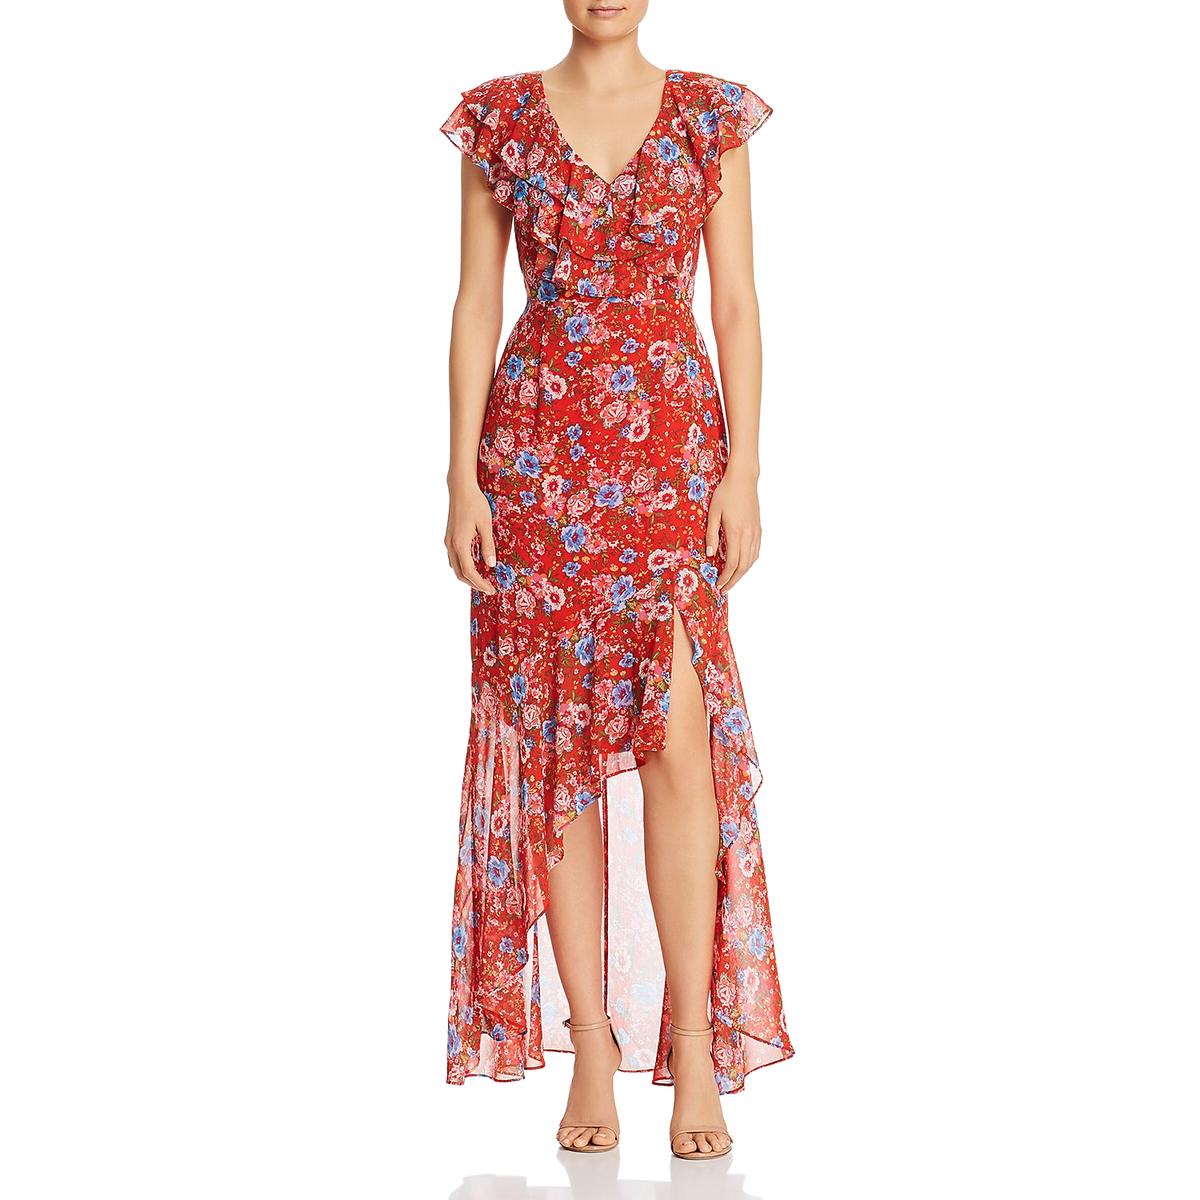 WAYF Womens Levani Red Ruffled Floral Hi-Low Midi Dress S BHFO 2892 | eBay